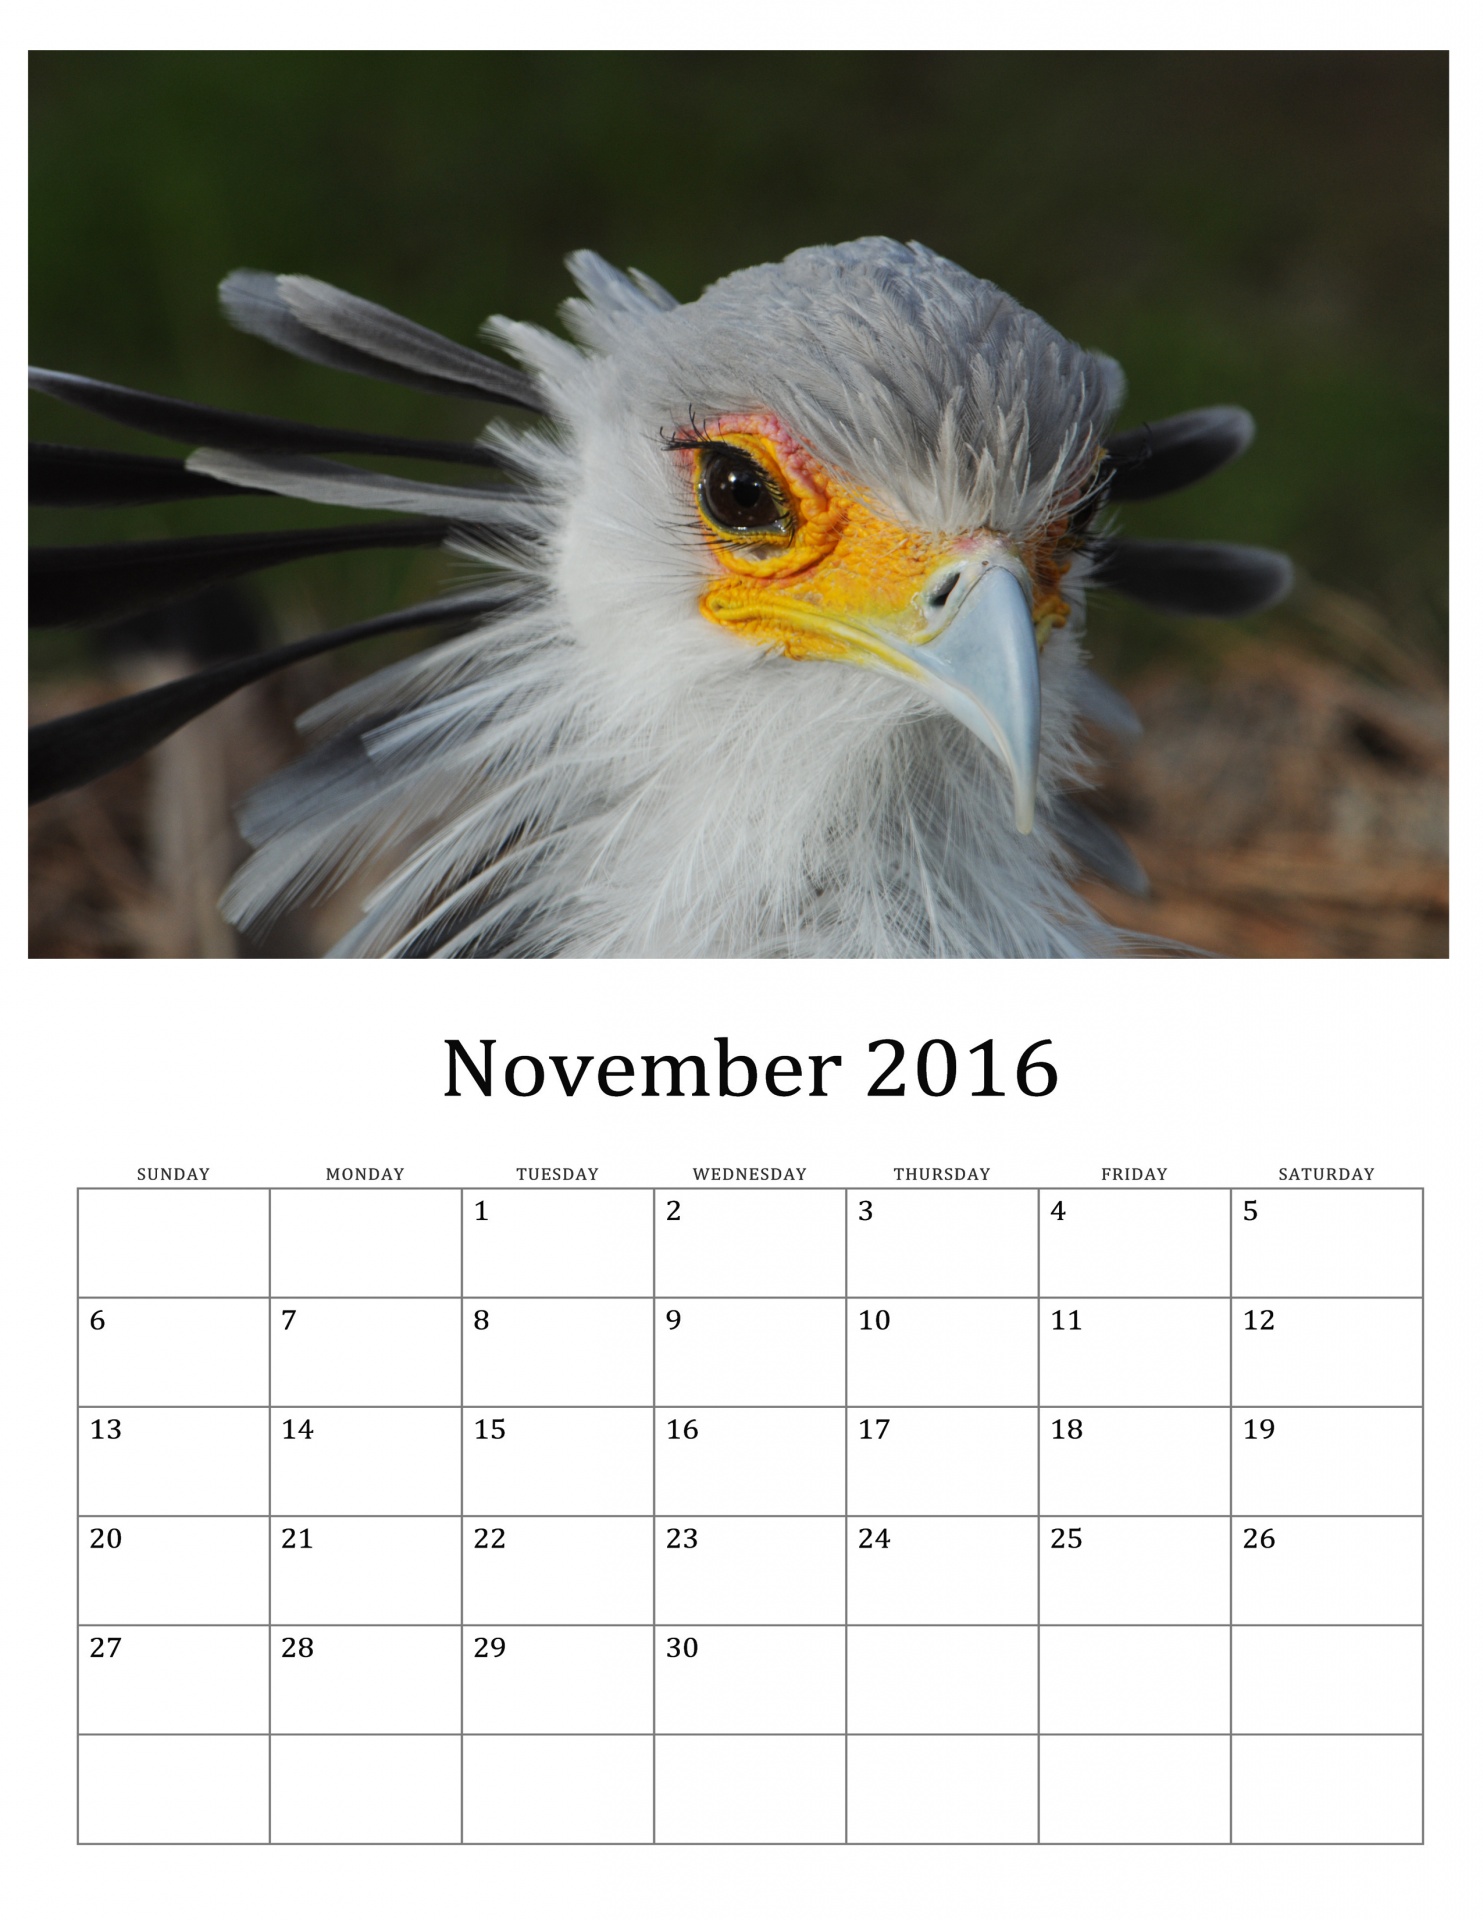 november-2016-grunge-calendar-free-stock-photo-public-domain-pictures